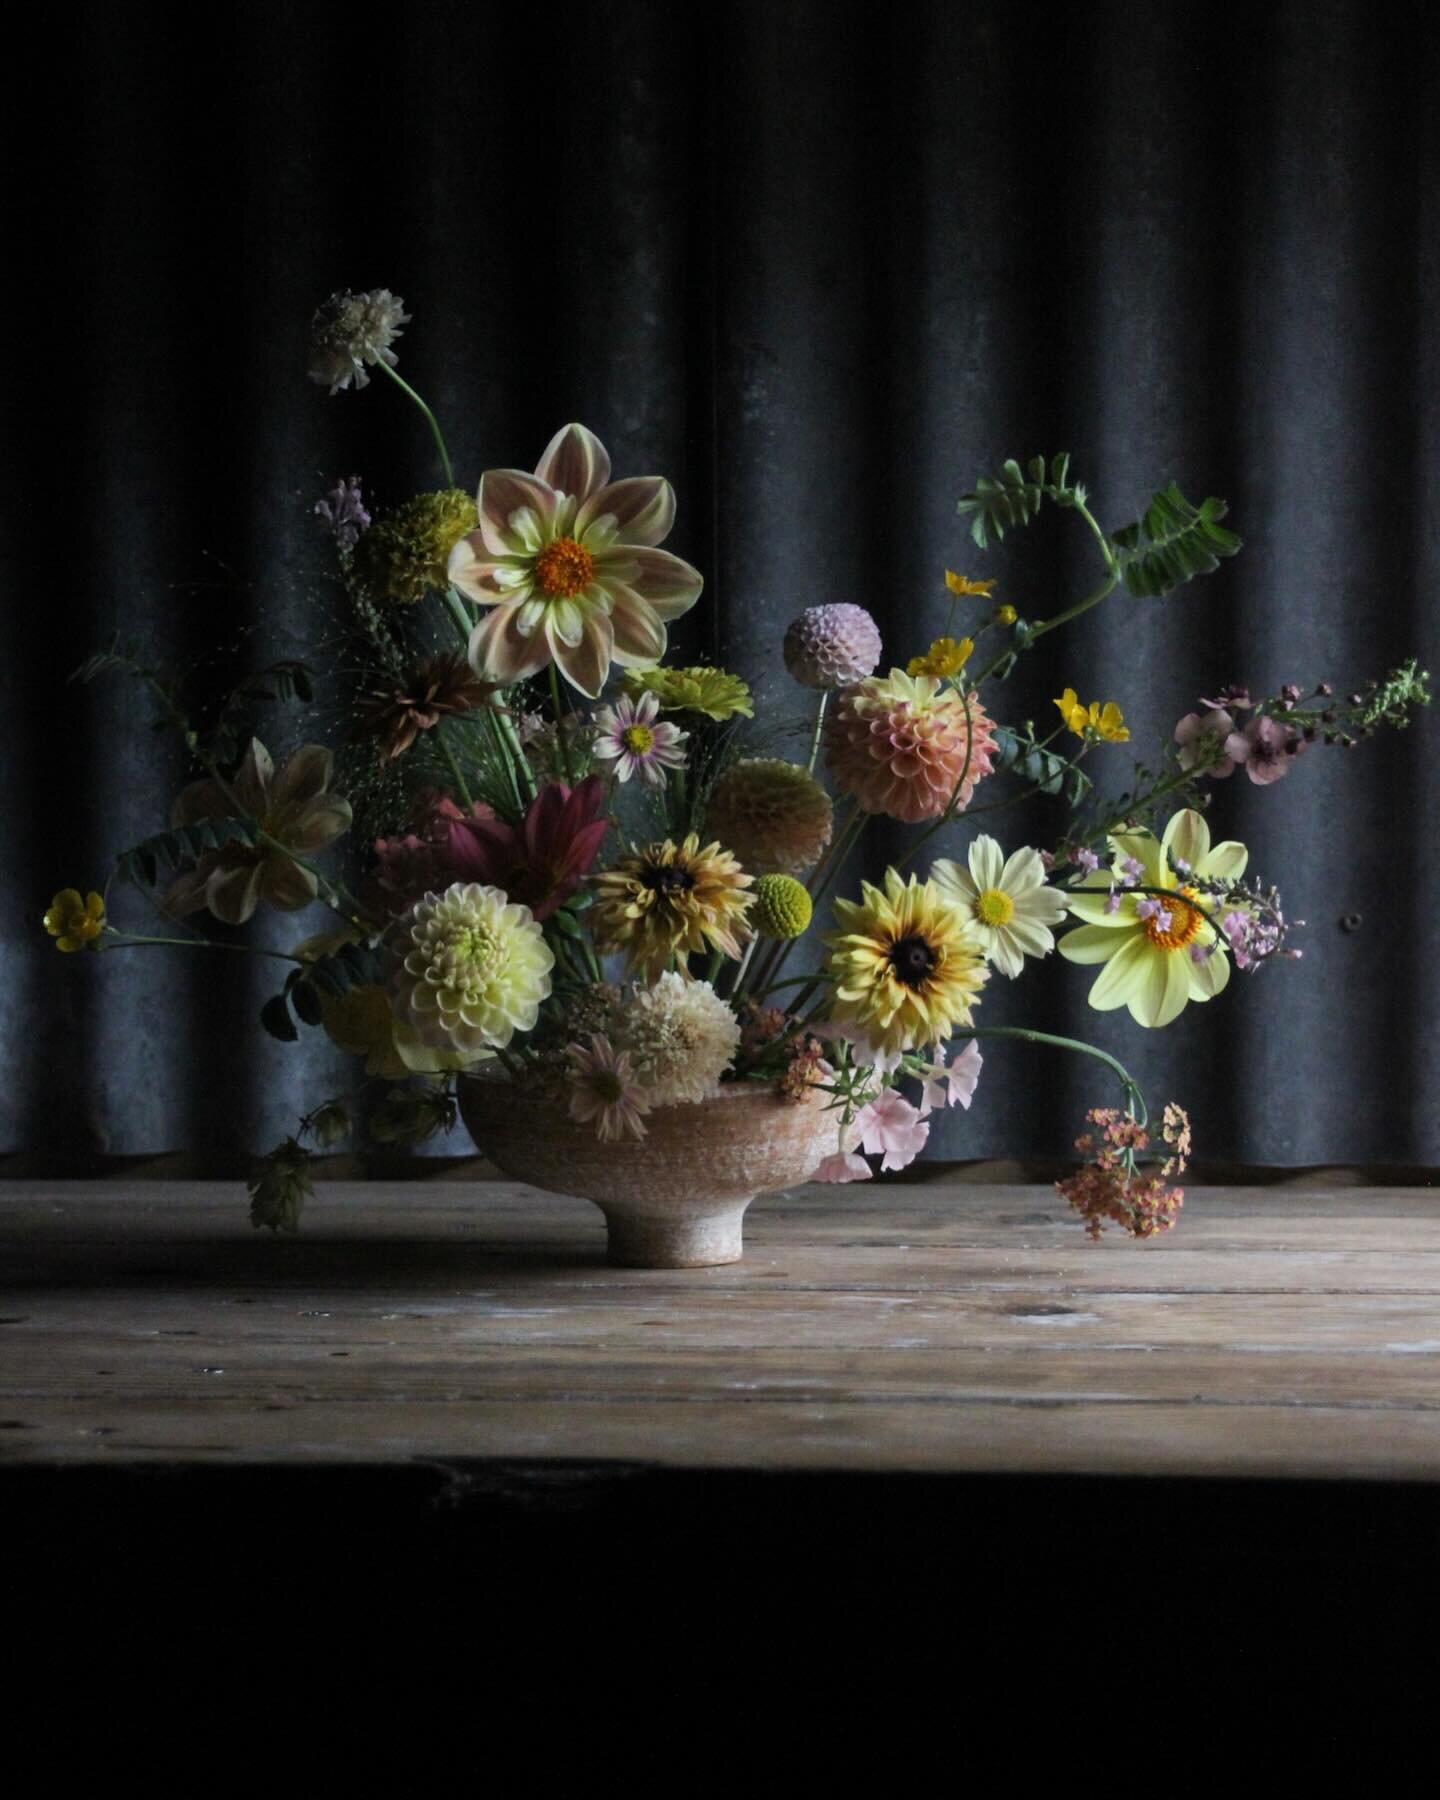 One from last October. Spot the buttercups!

#britishblooms #flowersinabowl #flowerarrangement #flowerphotography #flowersfromthefarm #octoberflowers #autumnblooms #autumlight